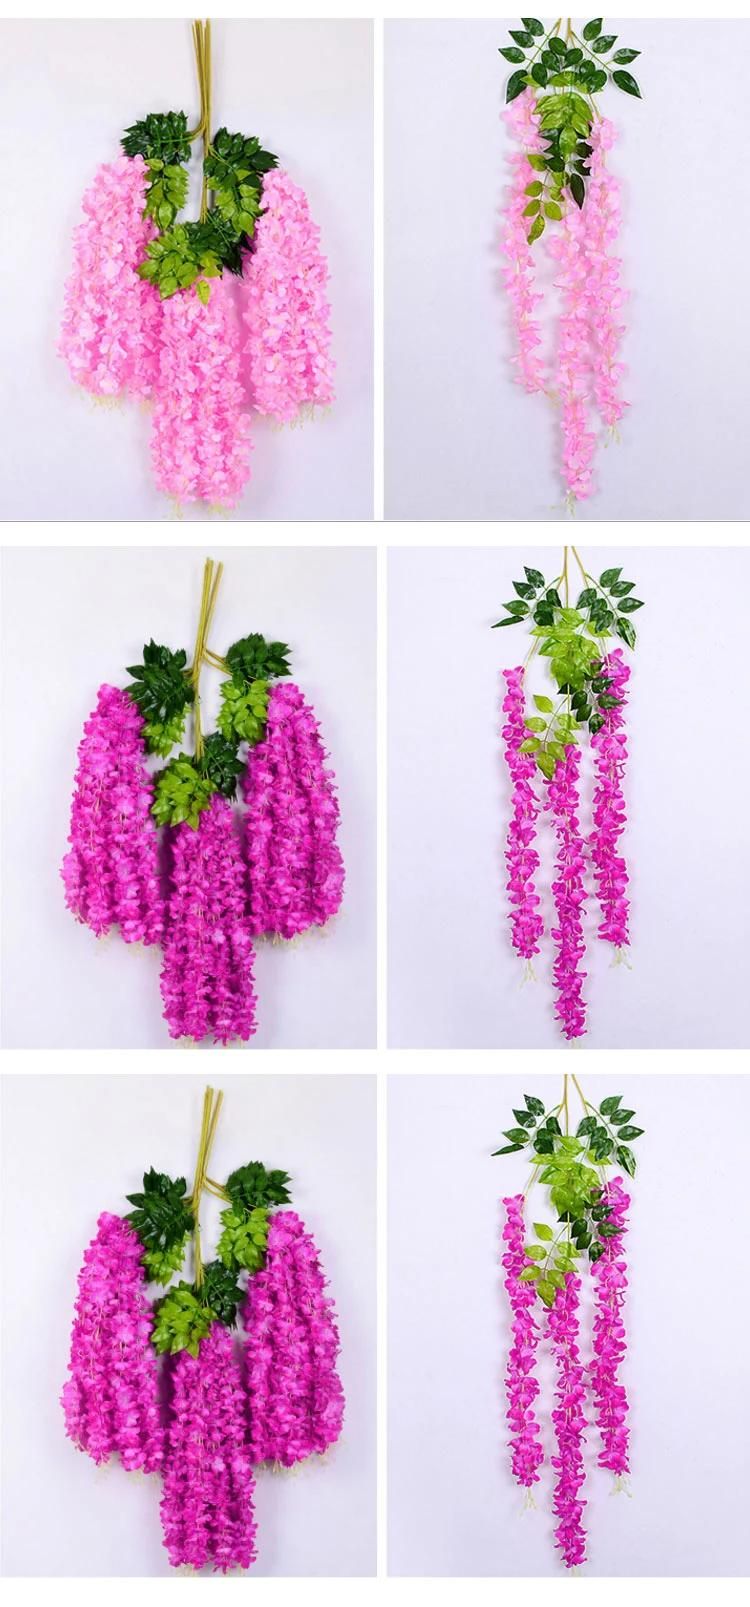 Artificial Wisteria Vine Ratta Hanging Garland Silk Flowers String Home Party Wedding Decor